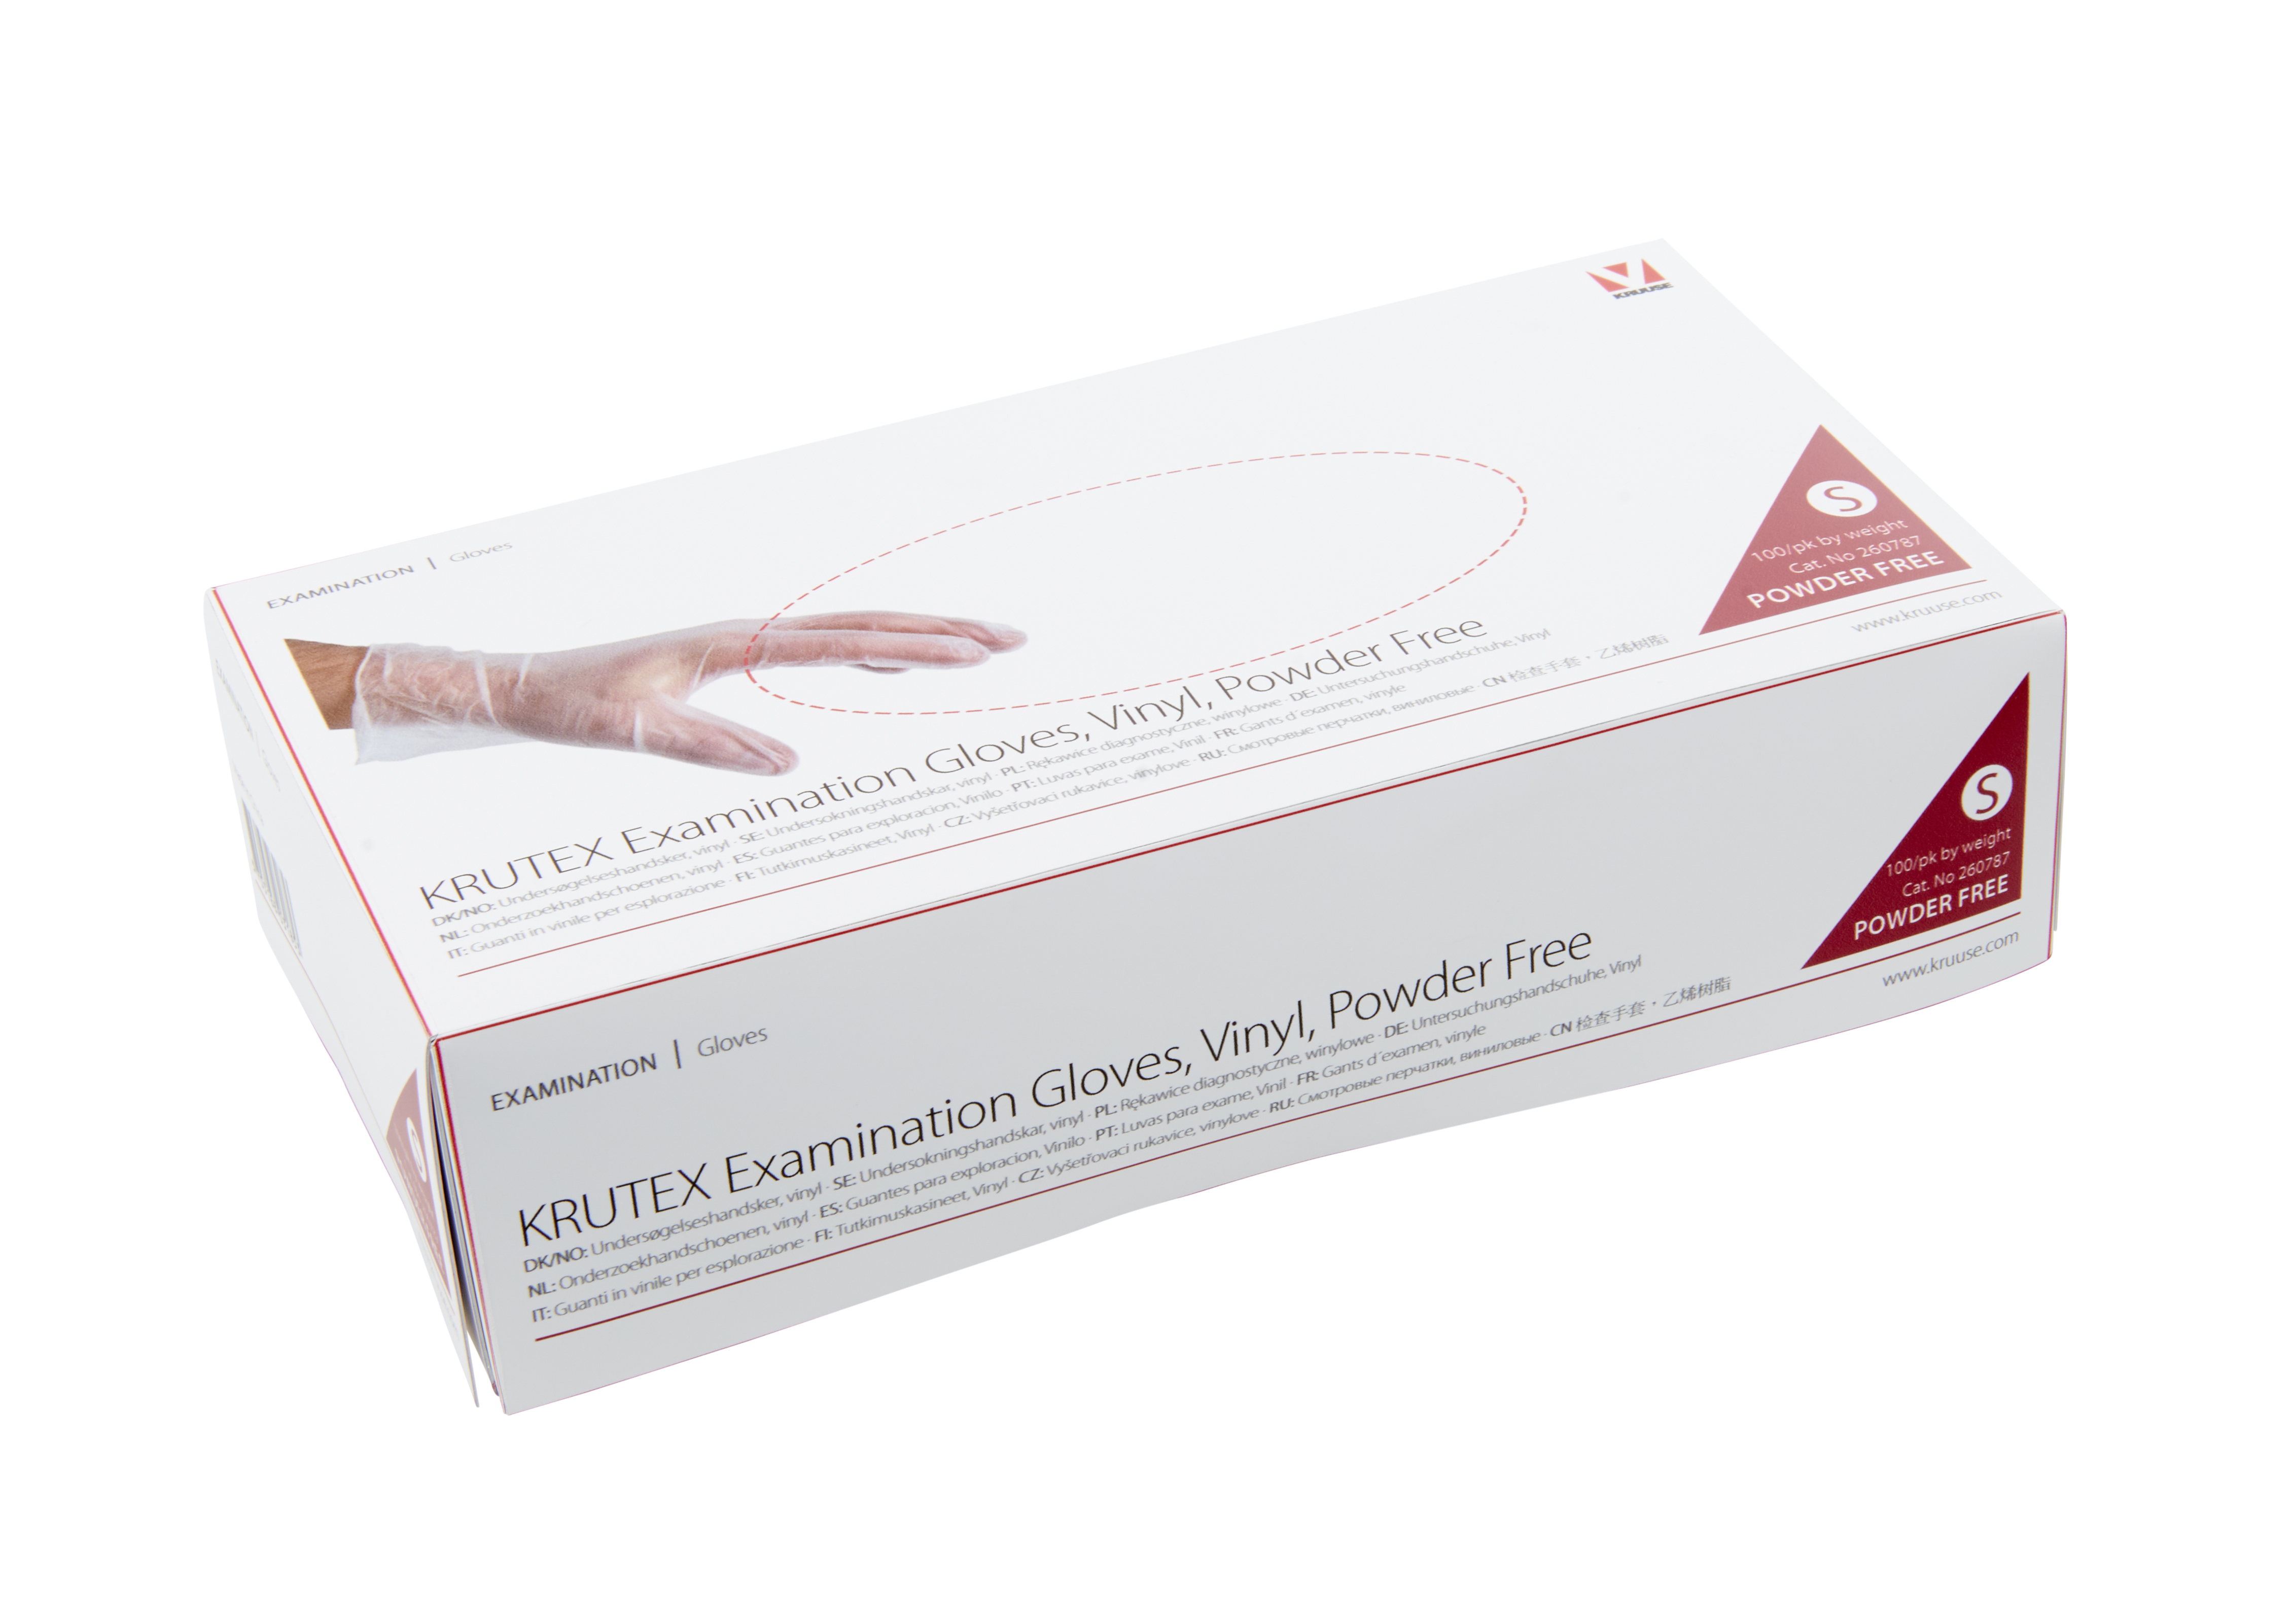 KRUTEX examination gloves, Vinyl powder free, small, 100/pk